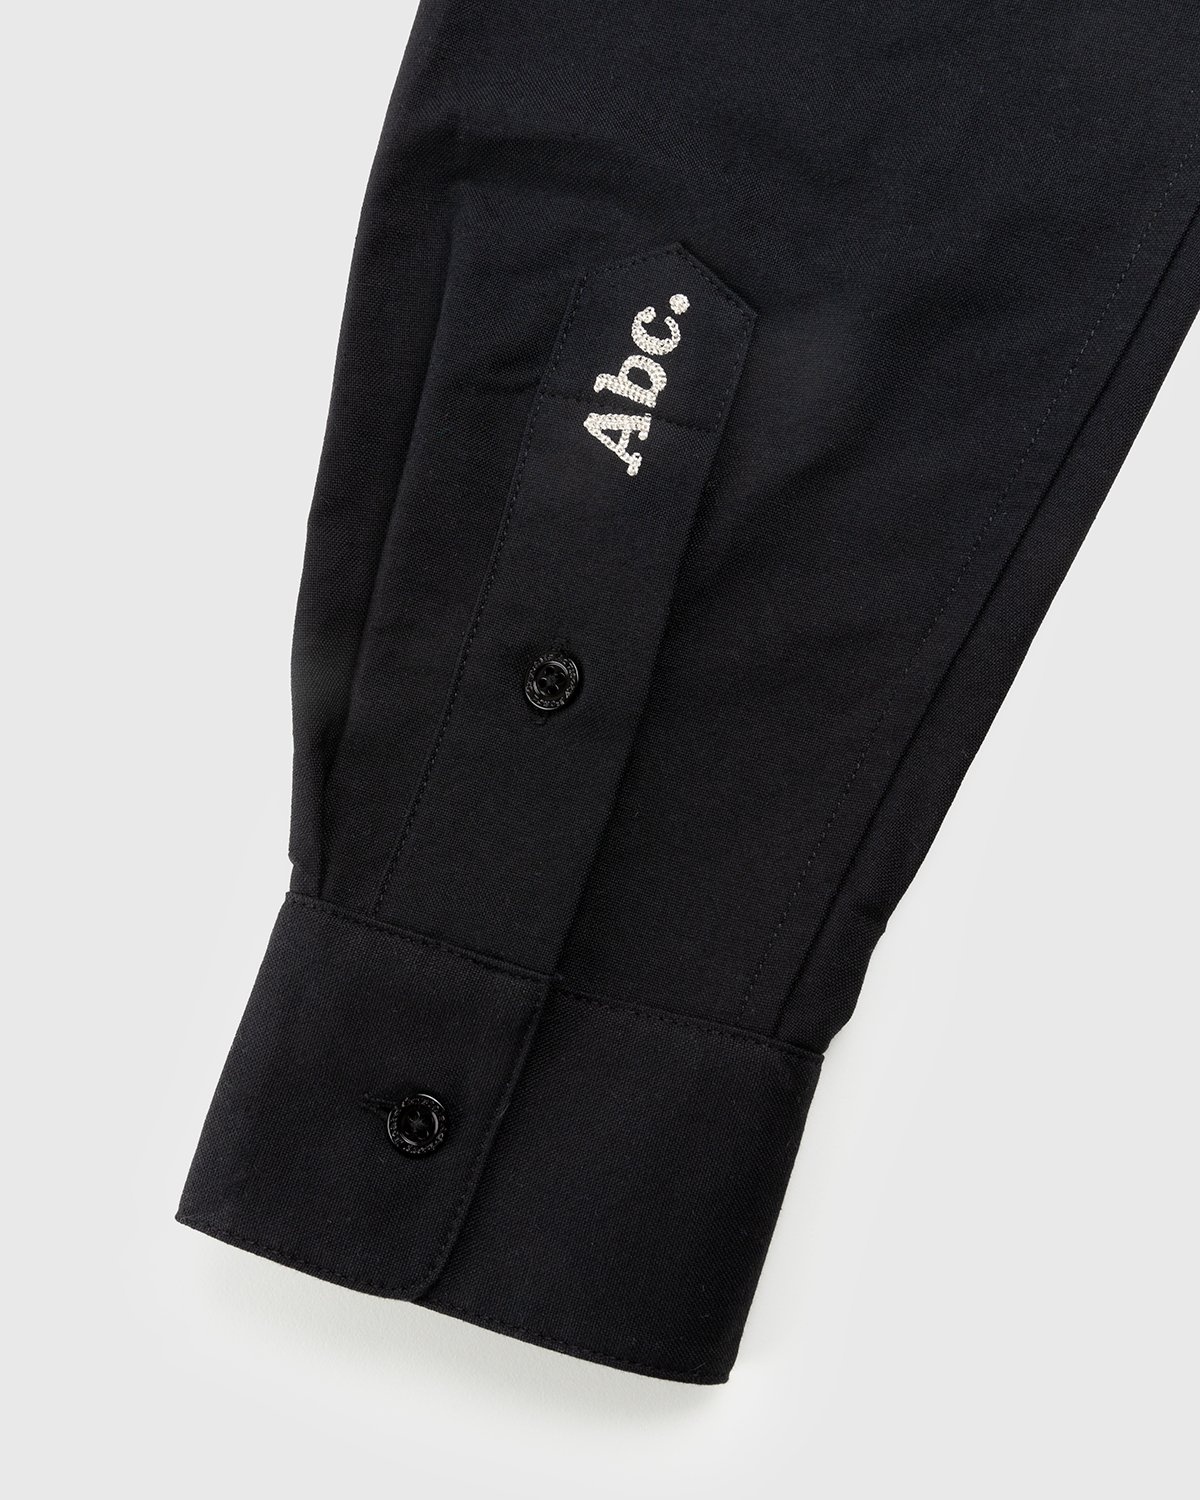 Abc. – Oxford Woven Shirt Anthracite - Longsleeve Shirts - Black - Image 3